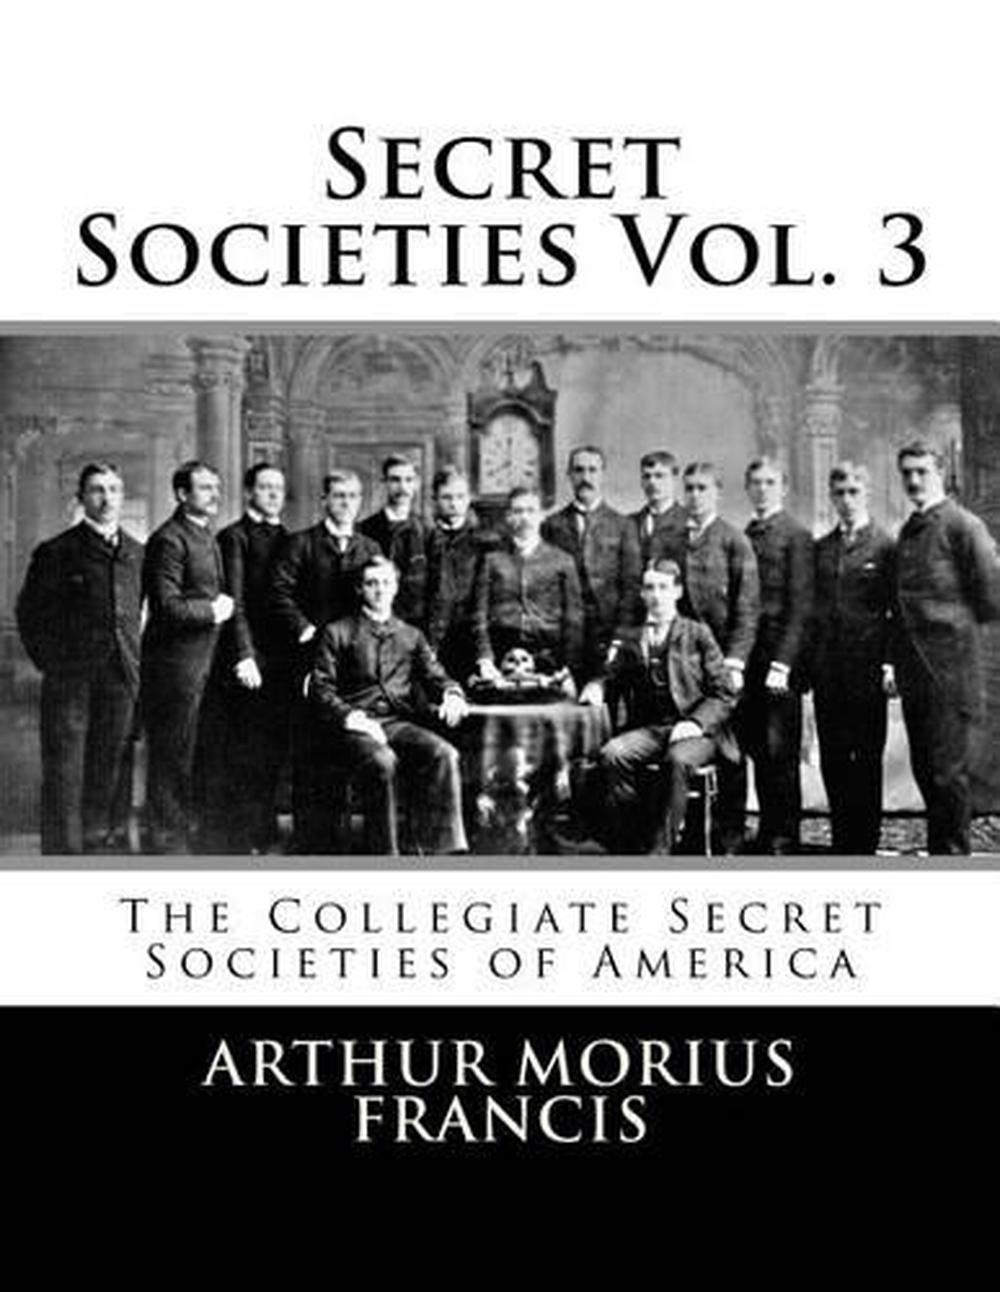 1200 page secret society manuscript